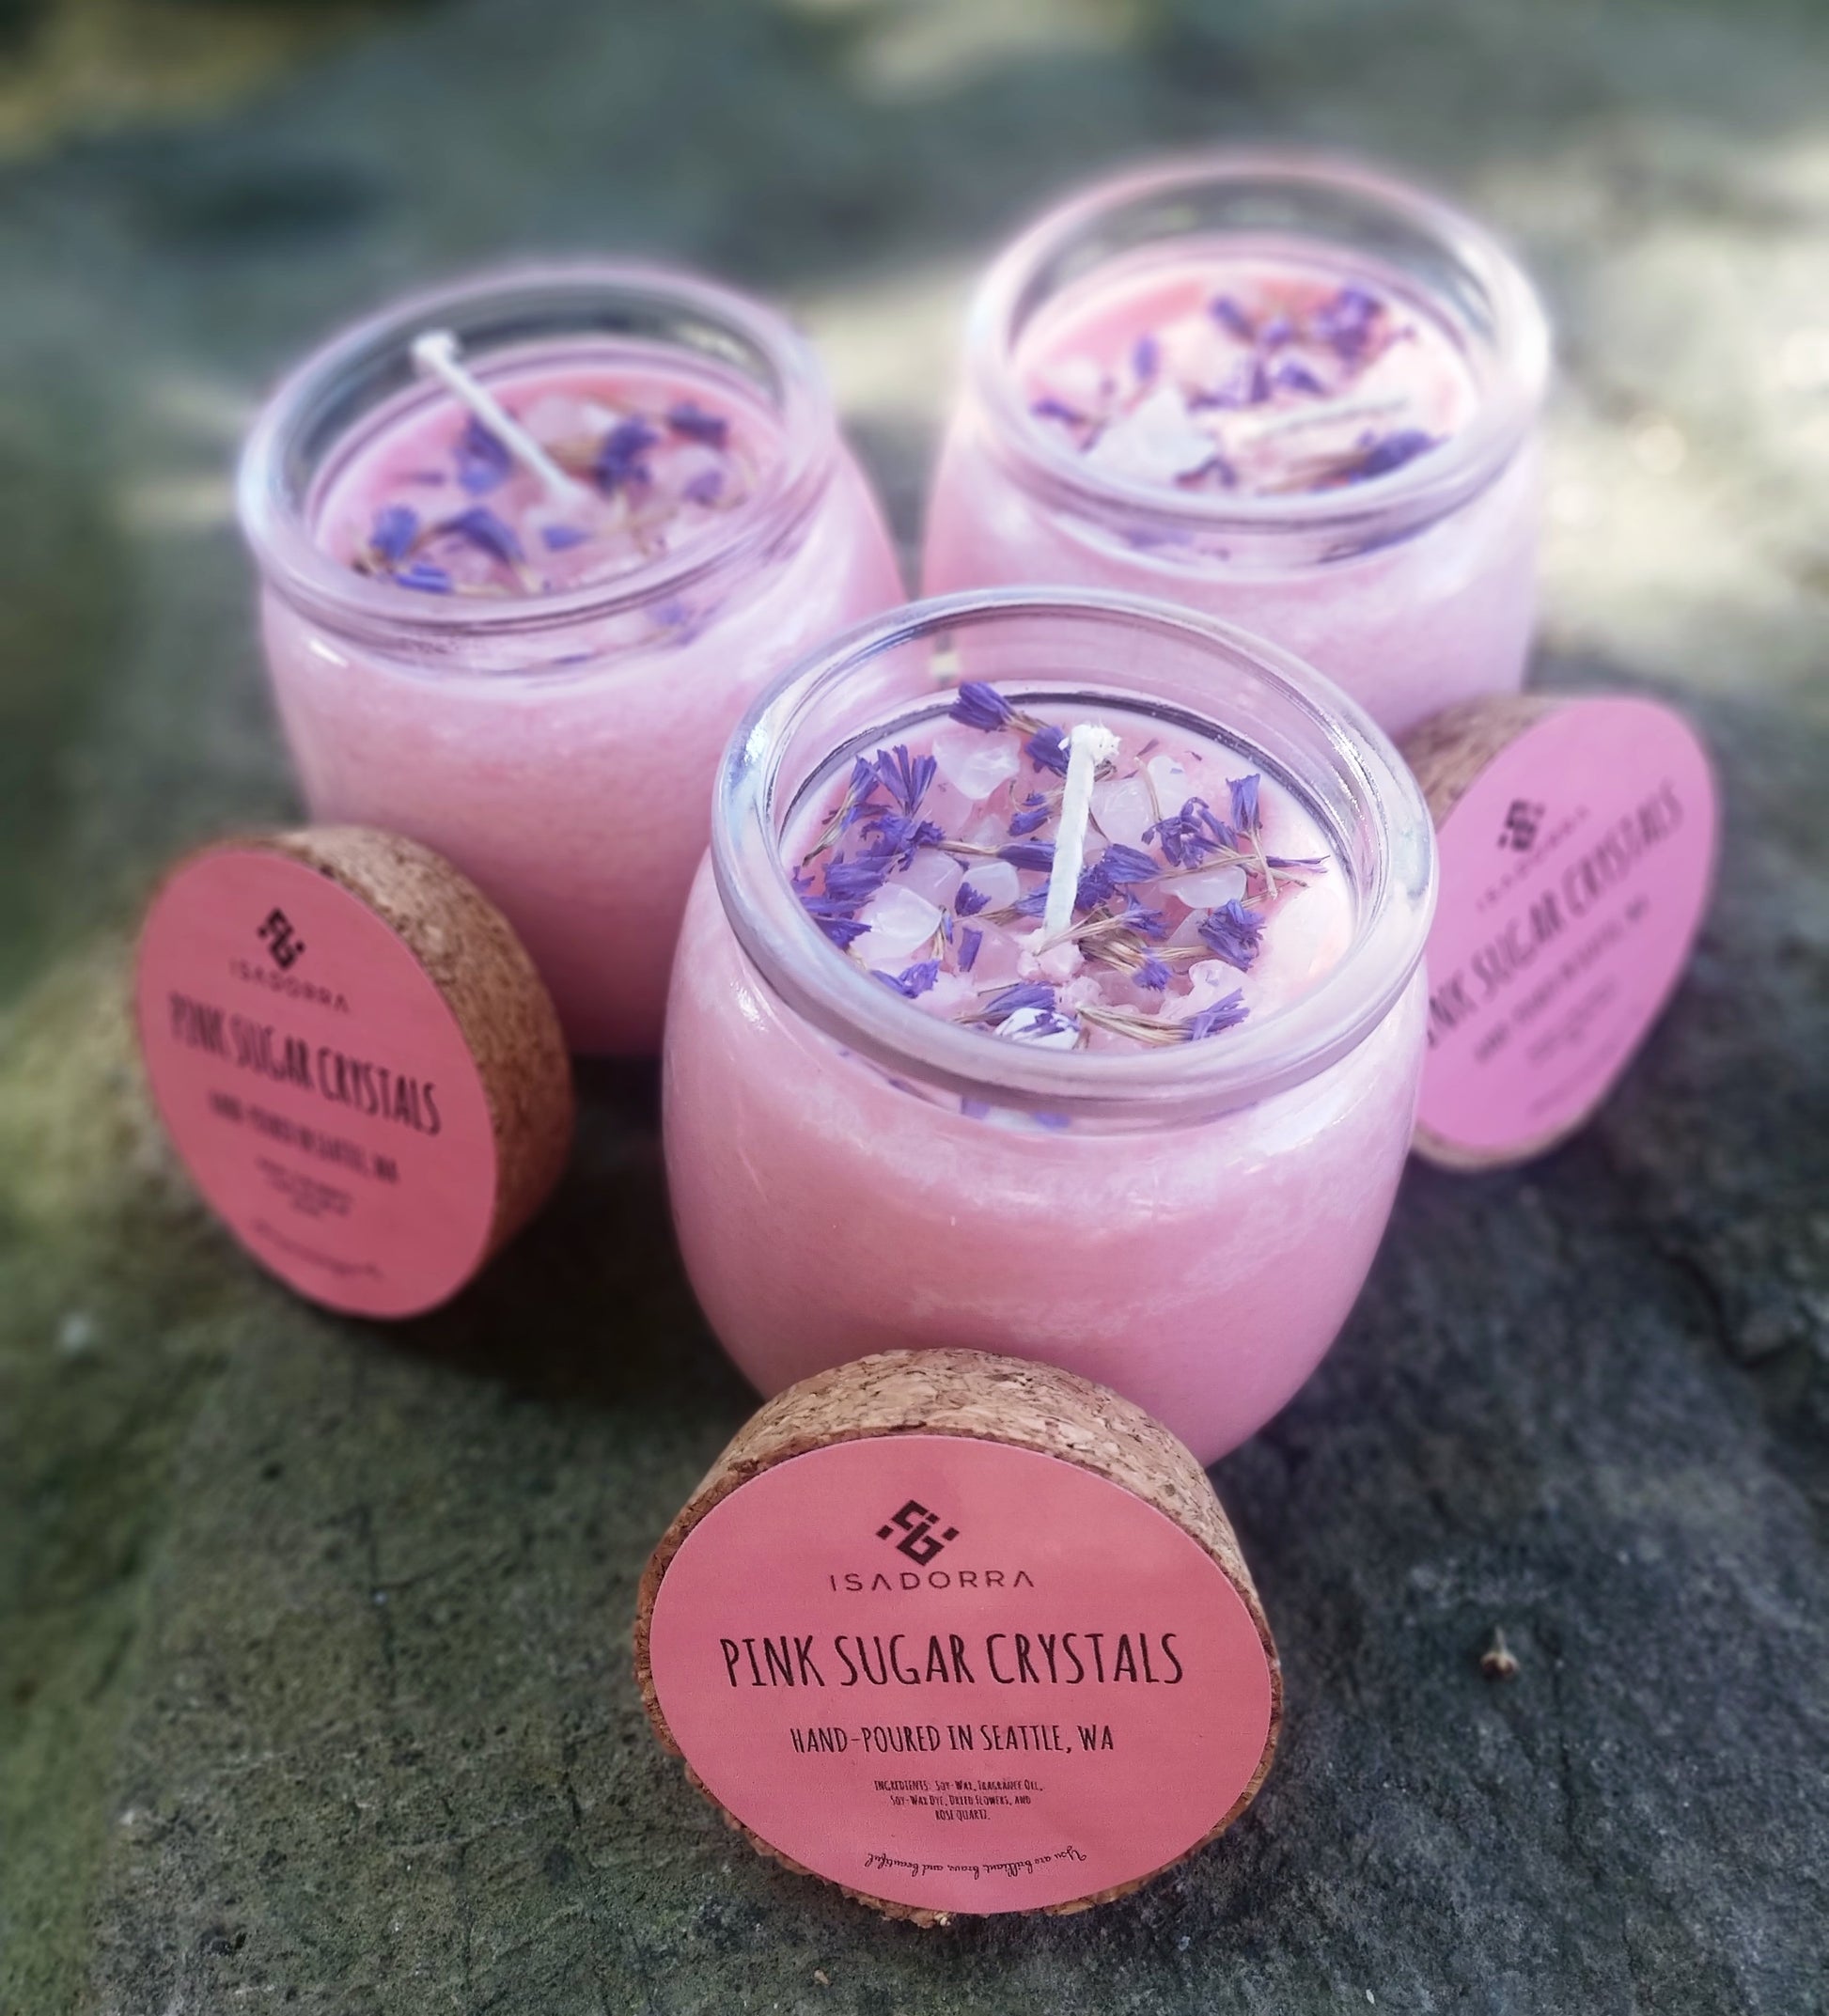 Pink Sugar Crystals Soy Candle - Isadorra